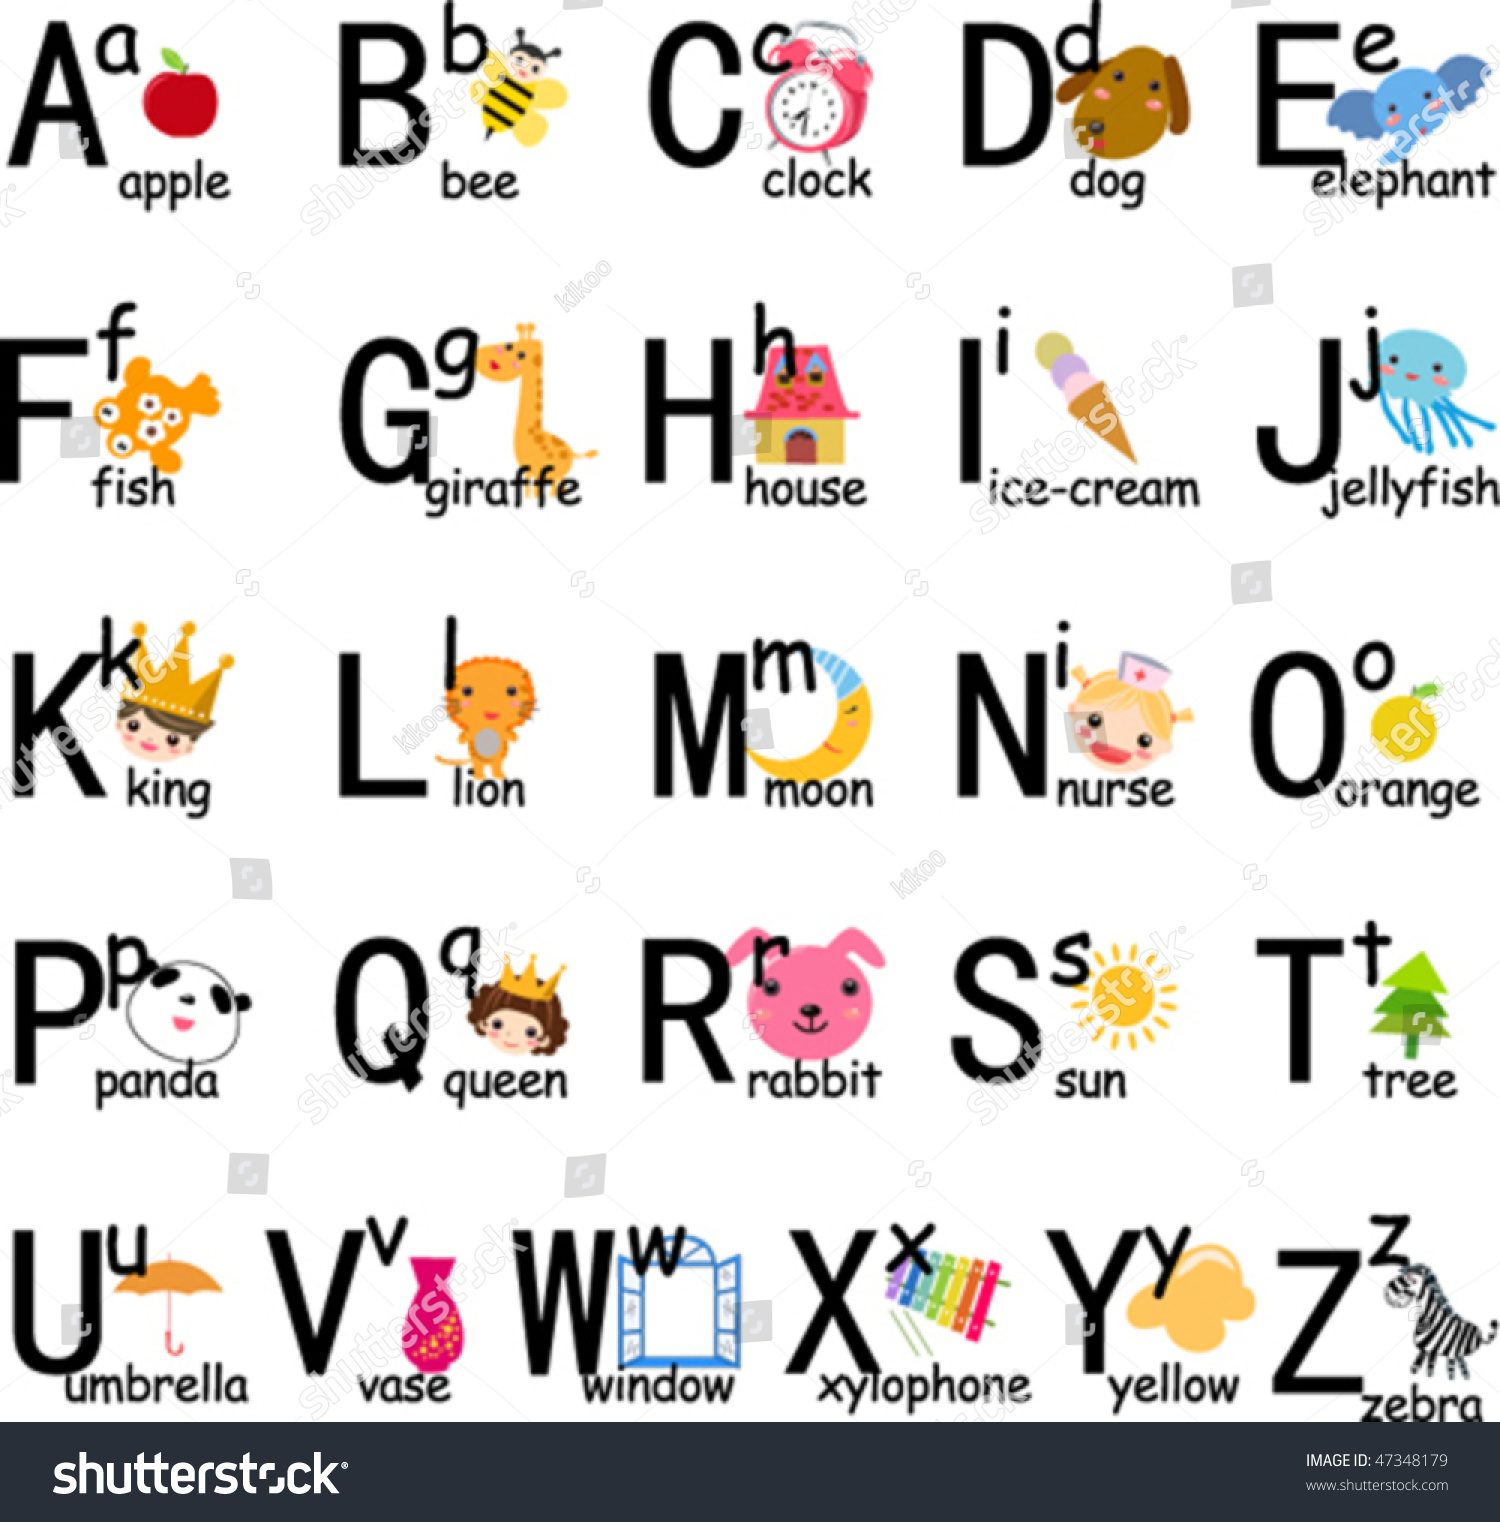 Cute Letters Stock Vector Illustration 47348179 : Shutterstock